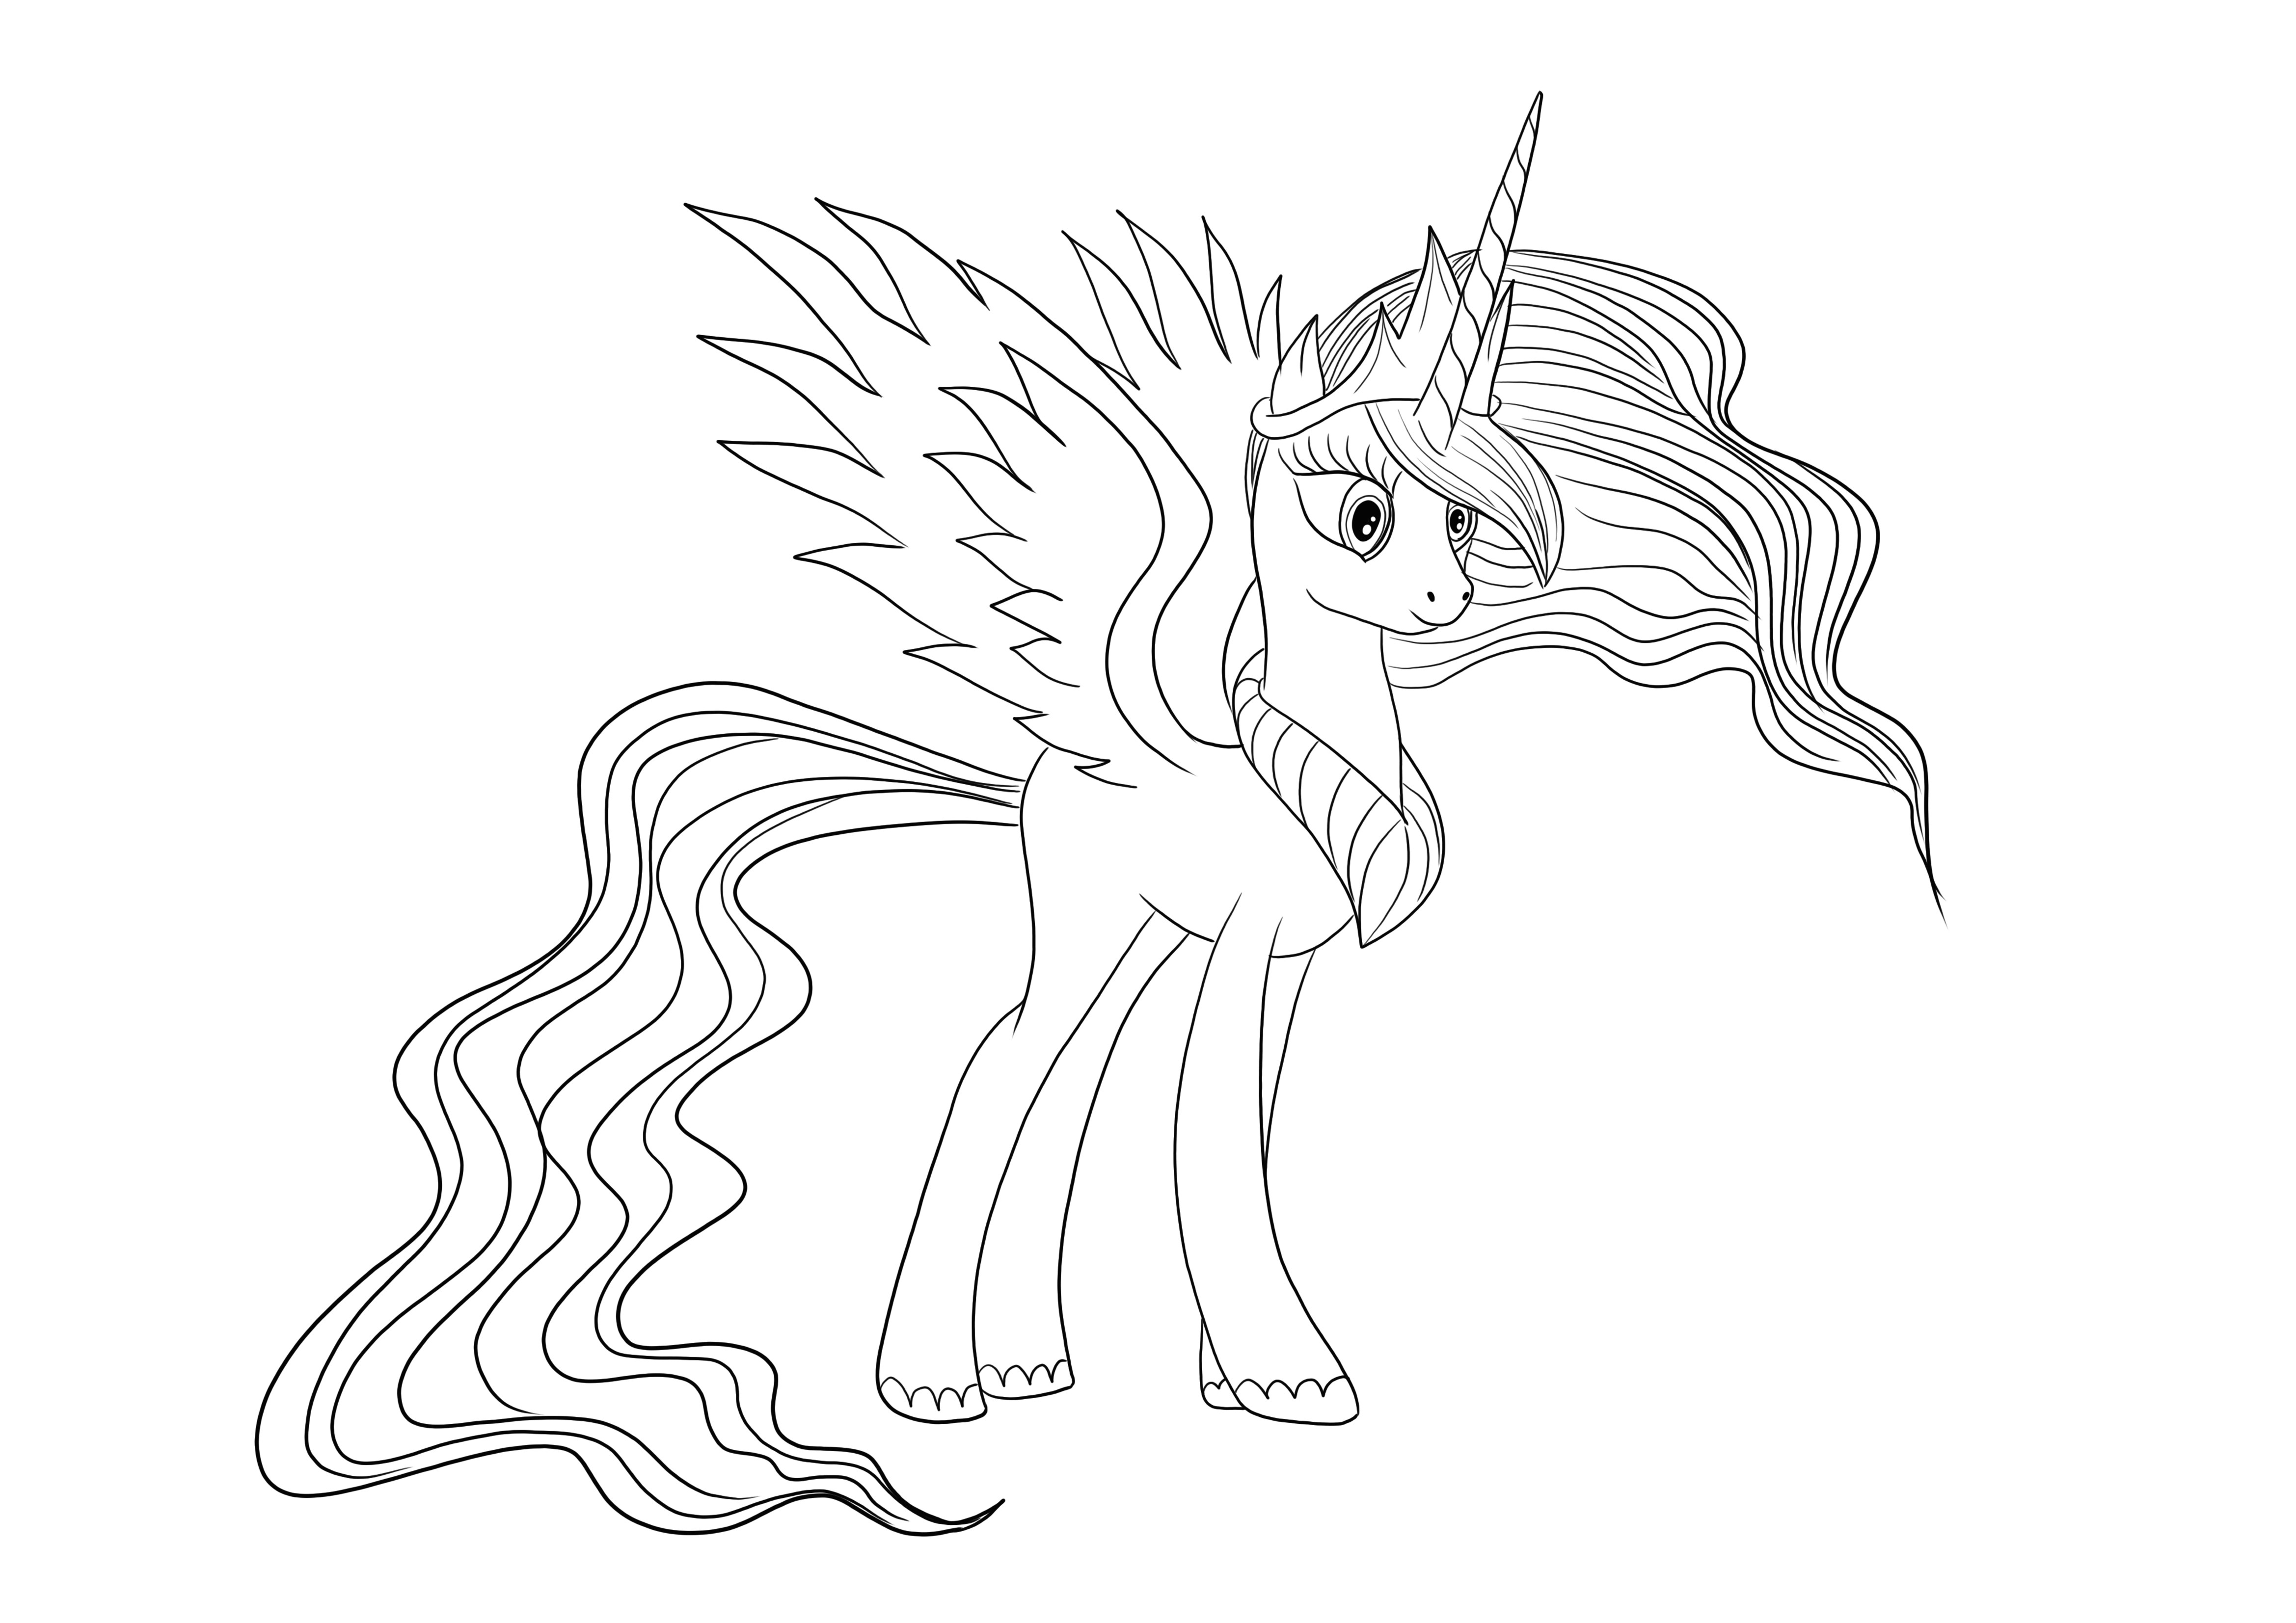 Gracious Princess Celestia dari Little Pony untuk diunduh secara gratis dan mewarnai gambar